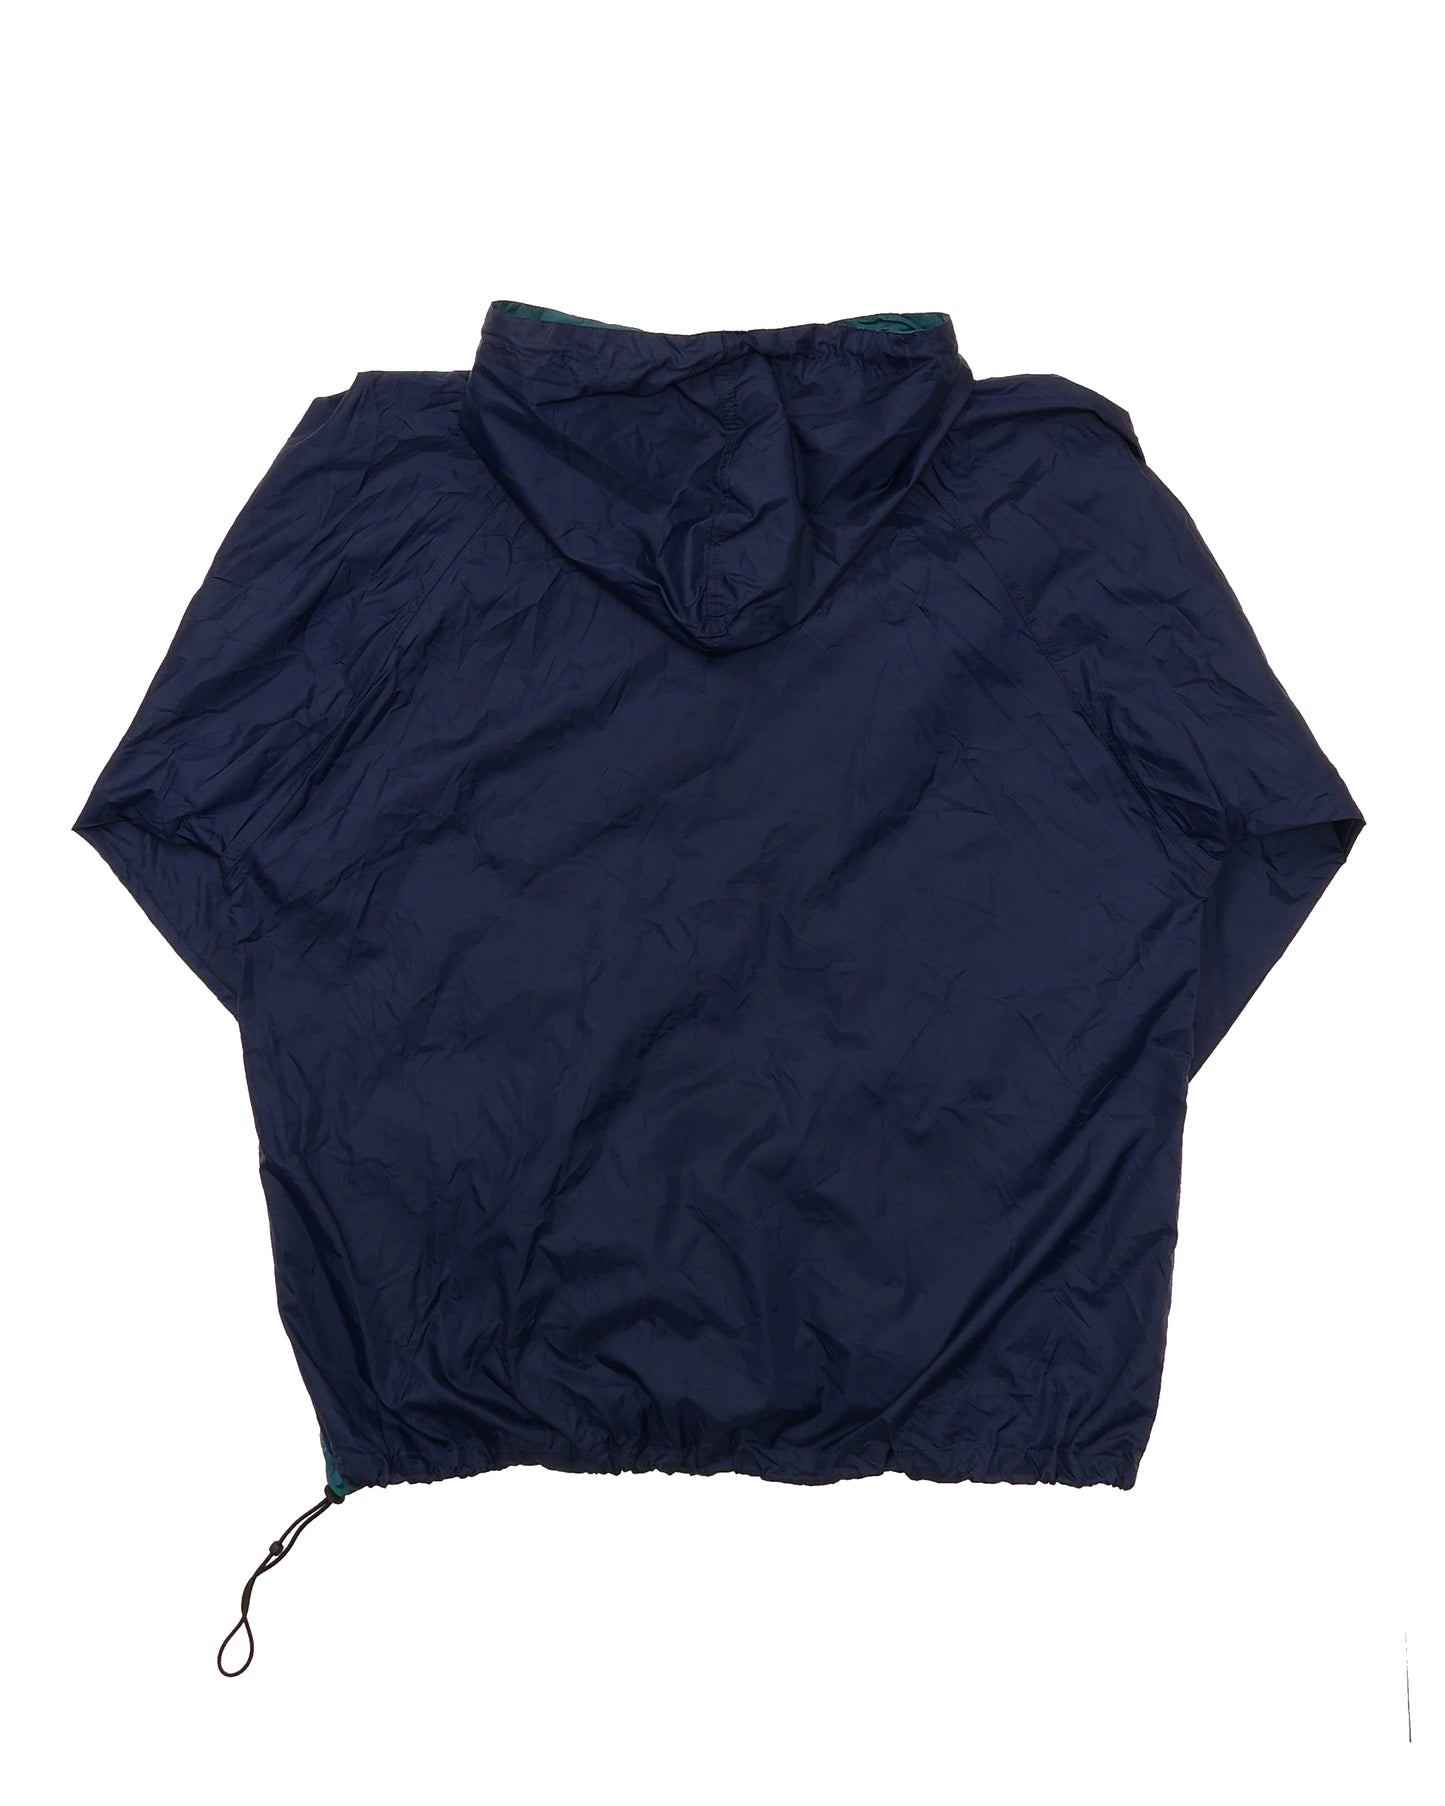 HELLY HANSEN / 90's Ripstop Nylon Jacket -XL-